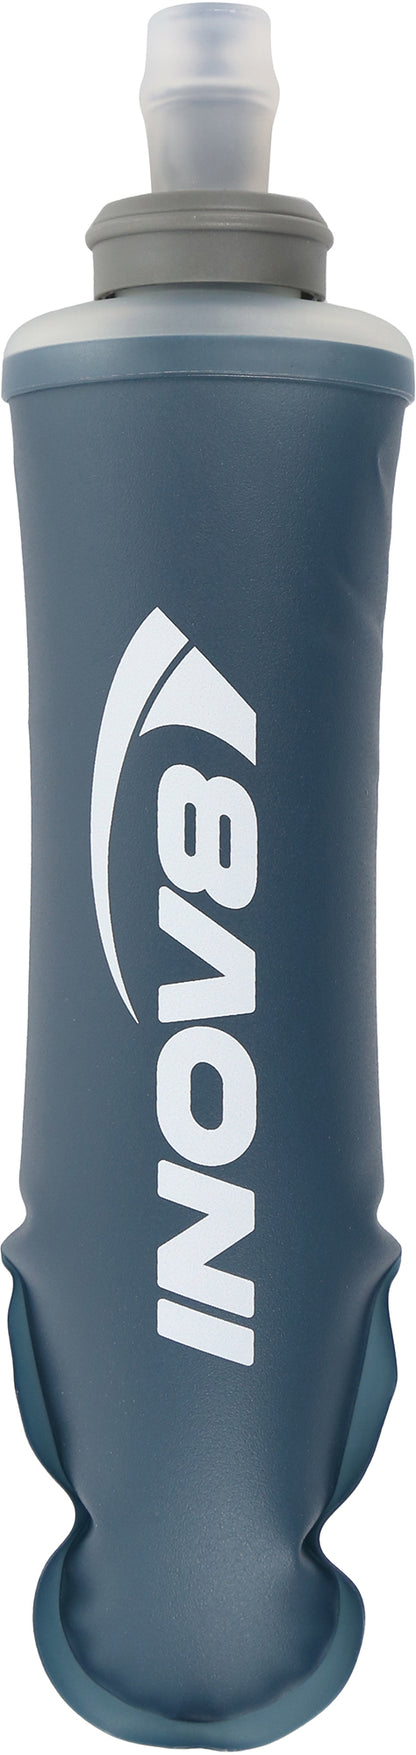 Inov8 Soft Flask Bottle 250ml - Grey